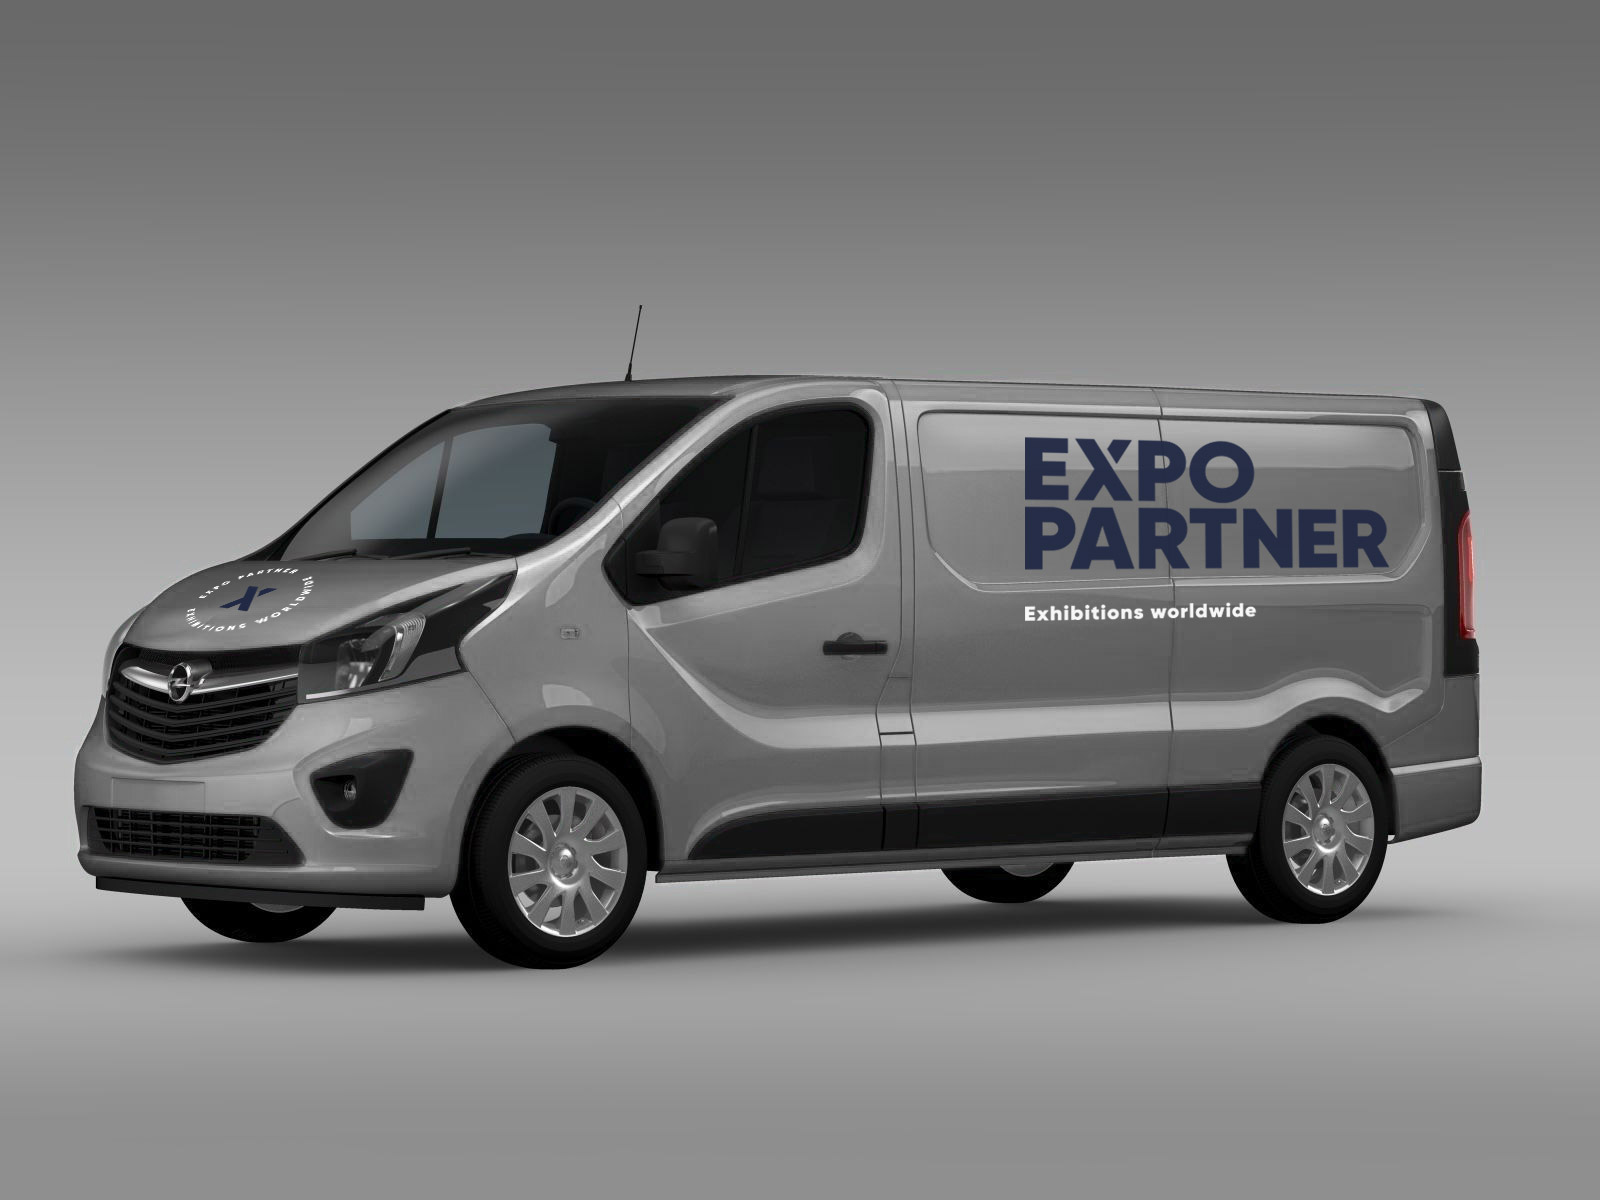 Expo Partner logo på bil